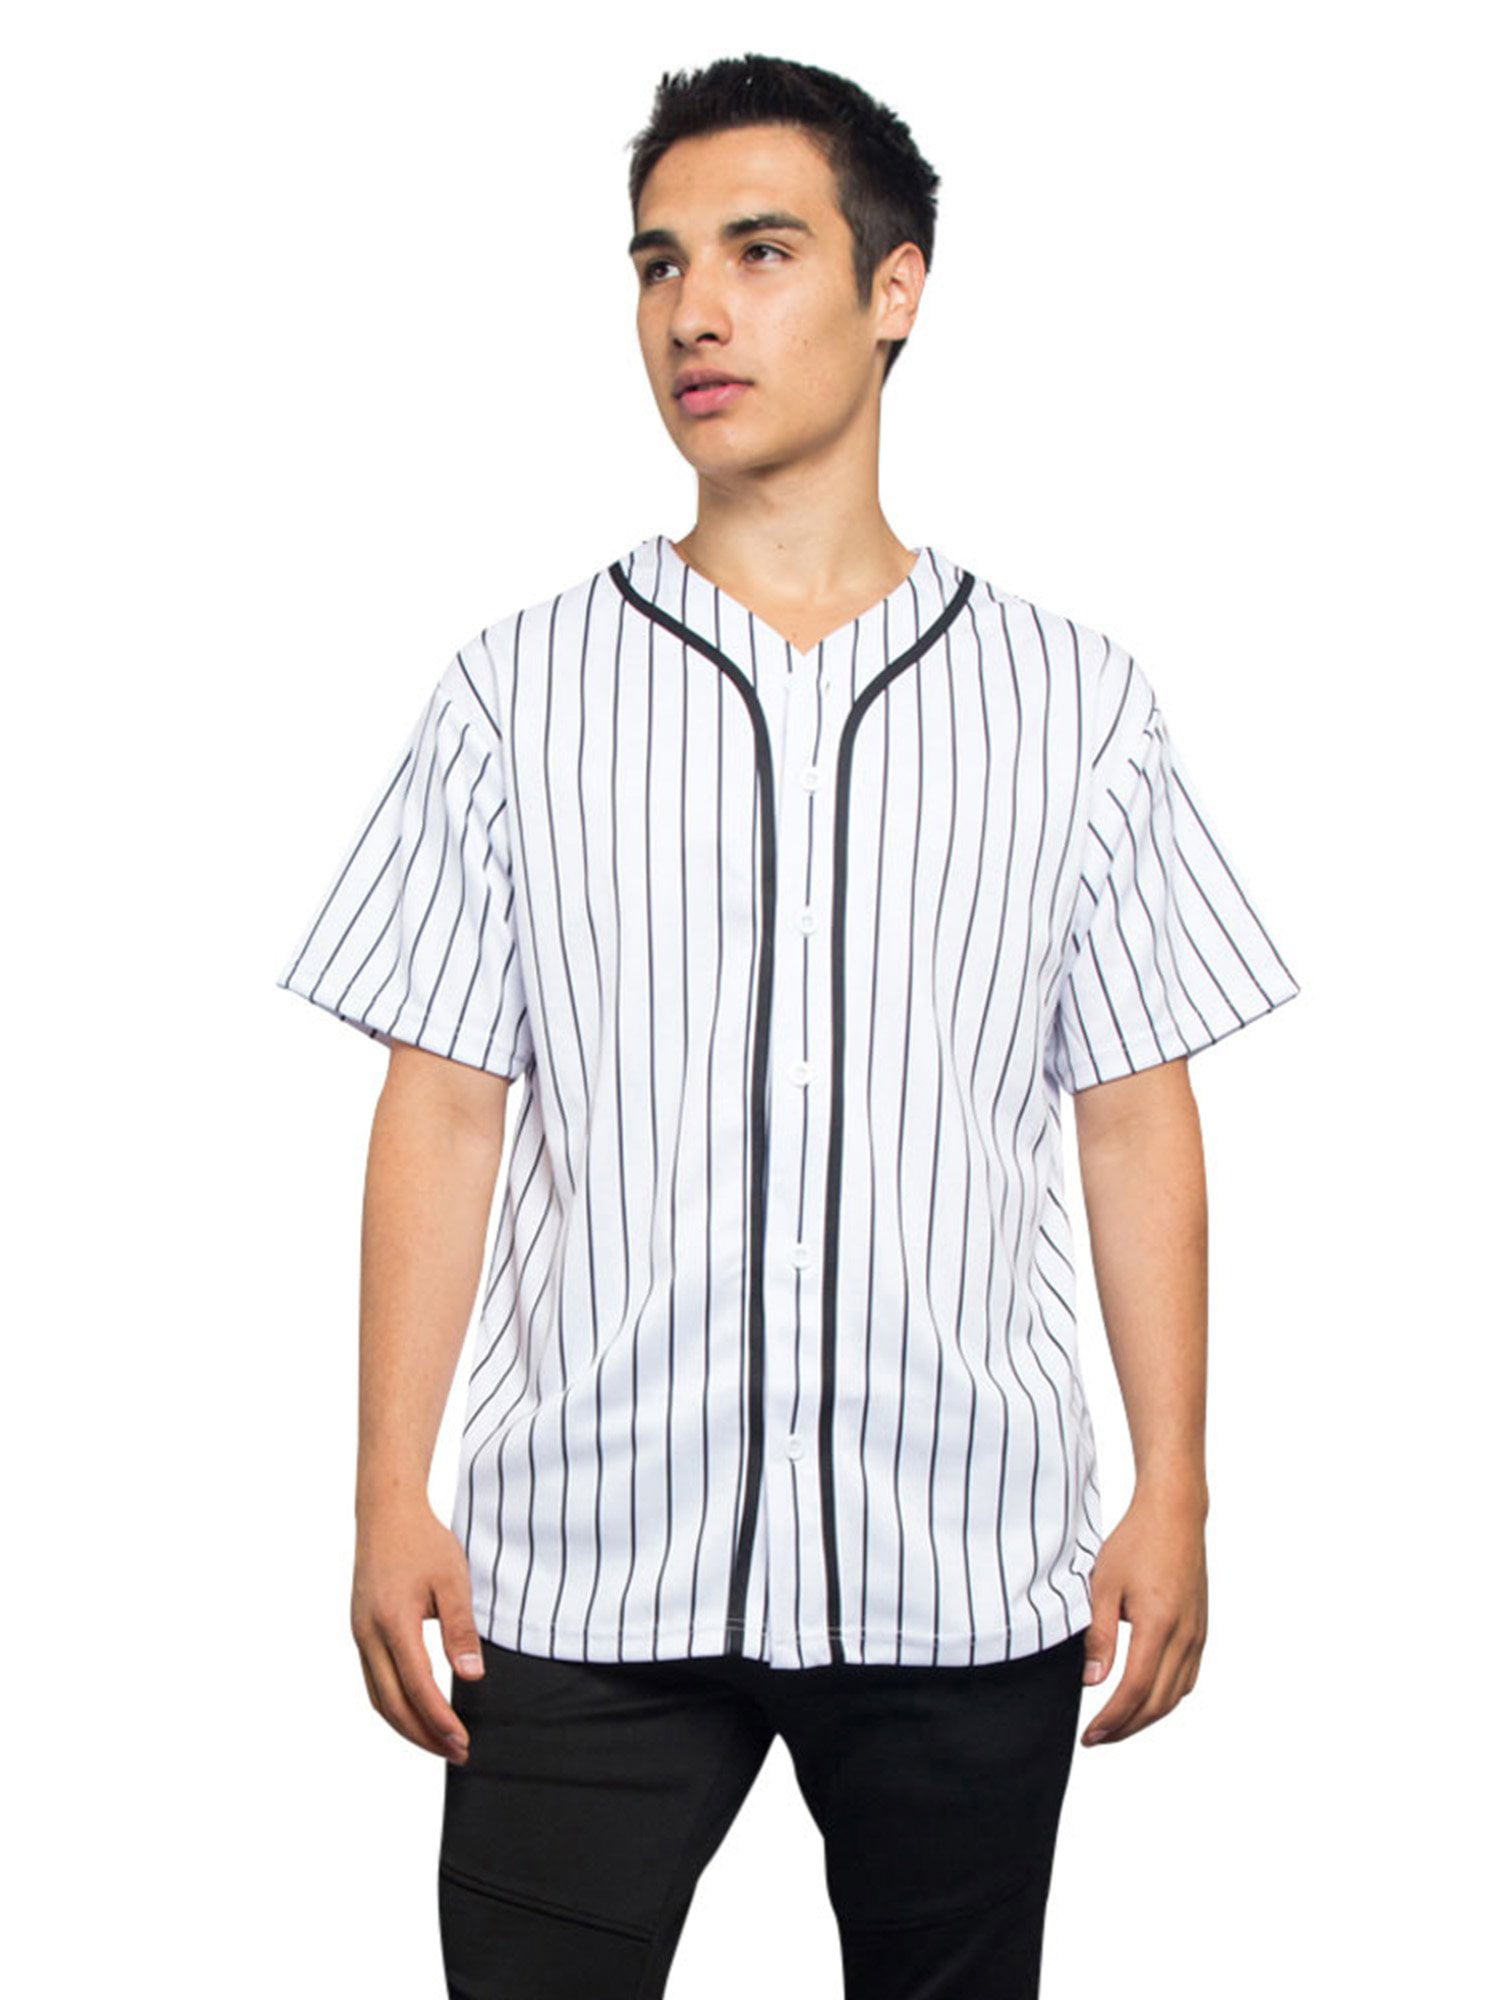 Men's Hipster Hip Hop Button Down Pin Striped Baseball Jersey Short Sleeve  Shirt BJ44 - White - 2X-Large